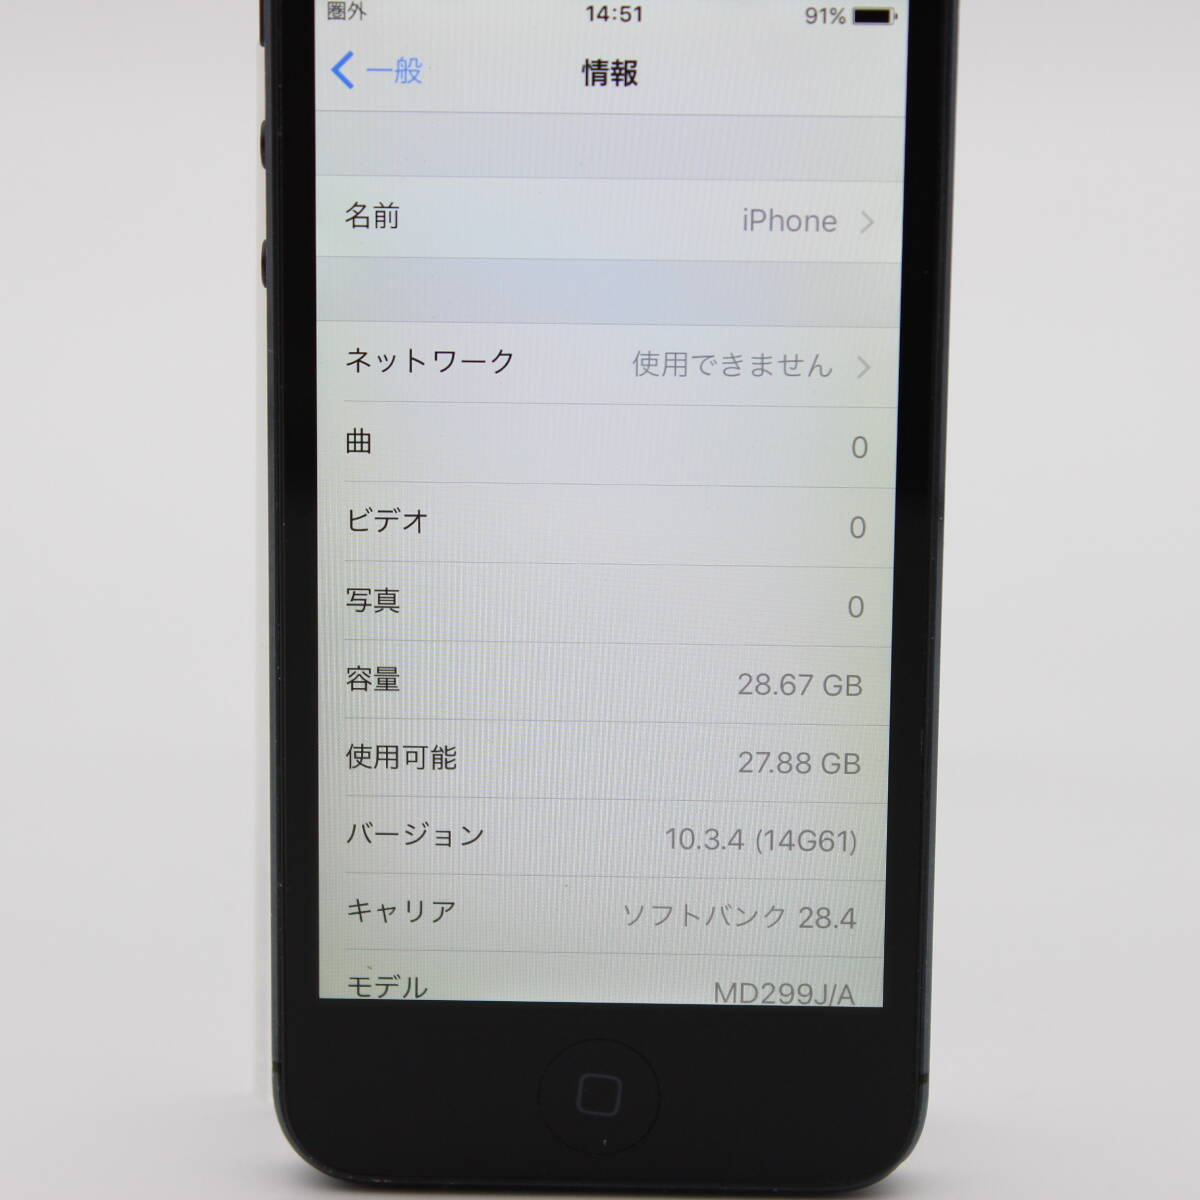 iPhone5 32GB MD299J/A ブラック Softbank 判定〇 #12221 (2)_画像2